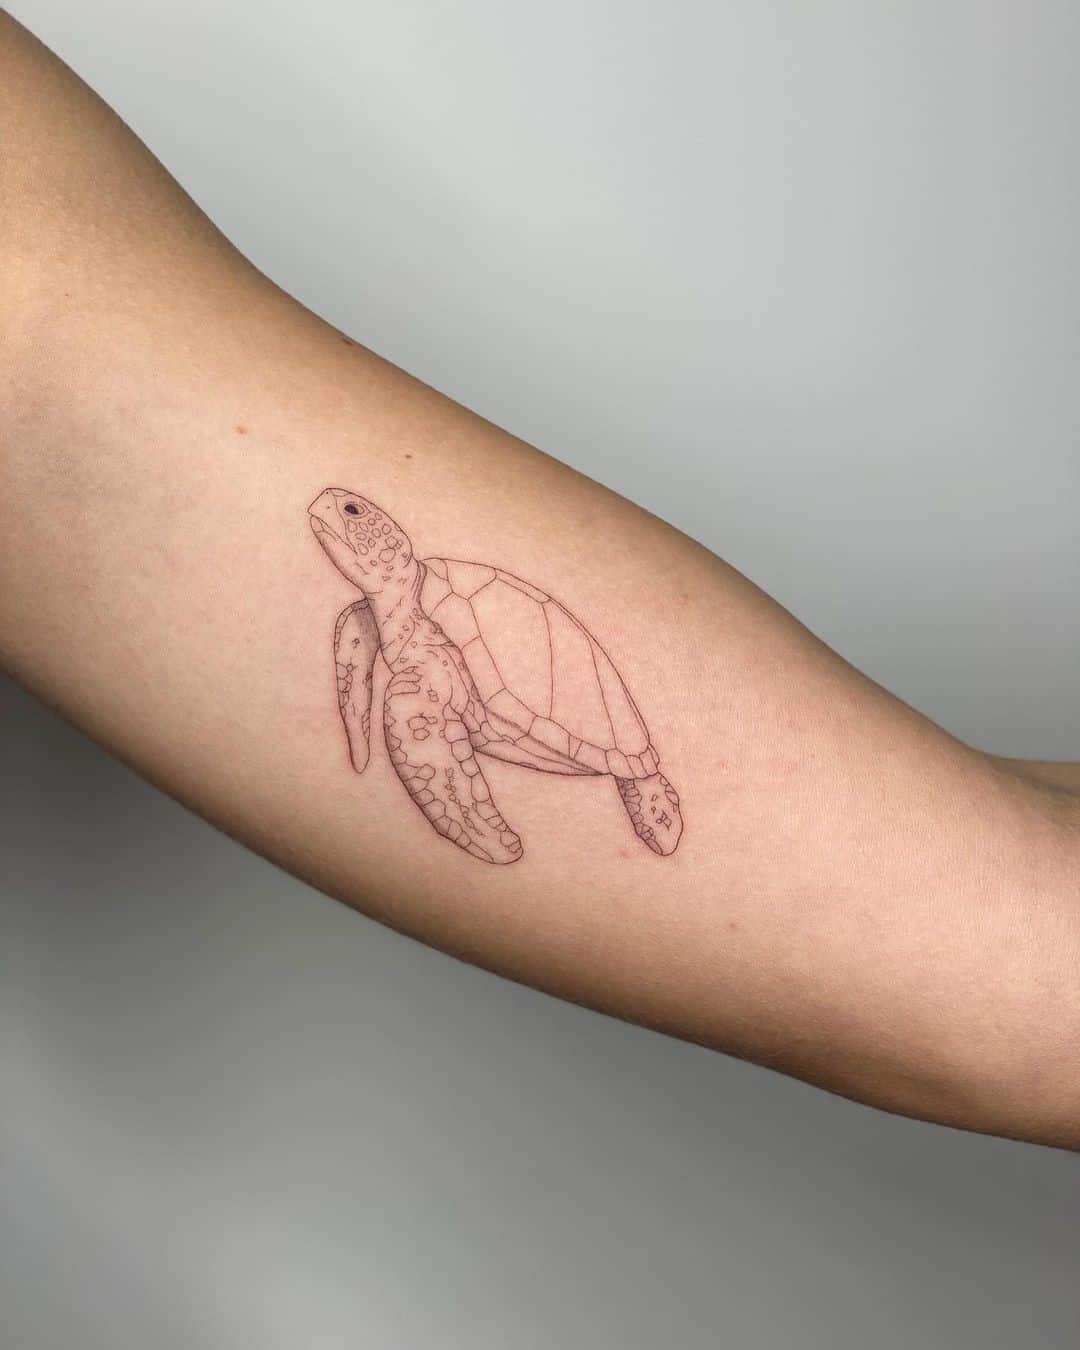 Top 40 Magnificent Sea Turtle Tattoo Design Ideas (2022 Updated) - Tattooed  Martha